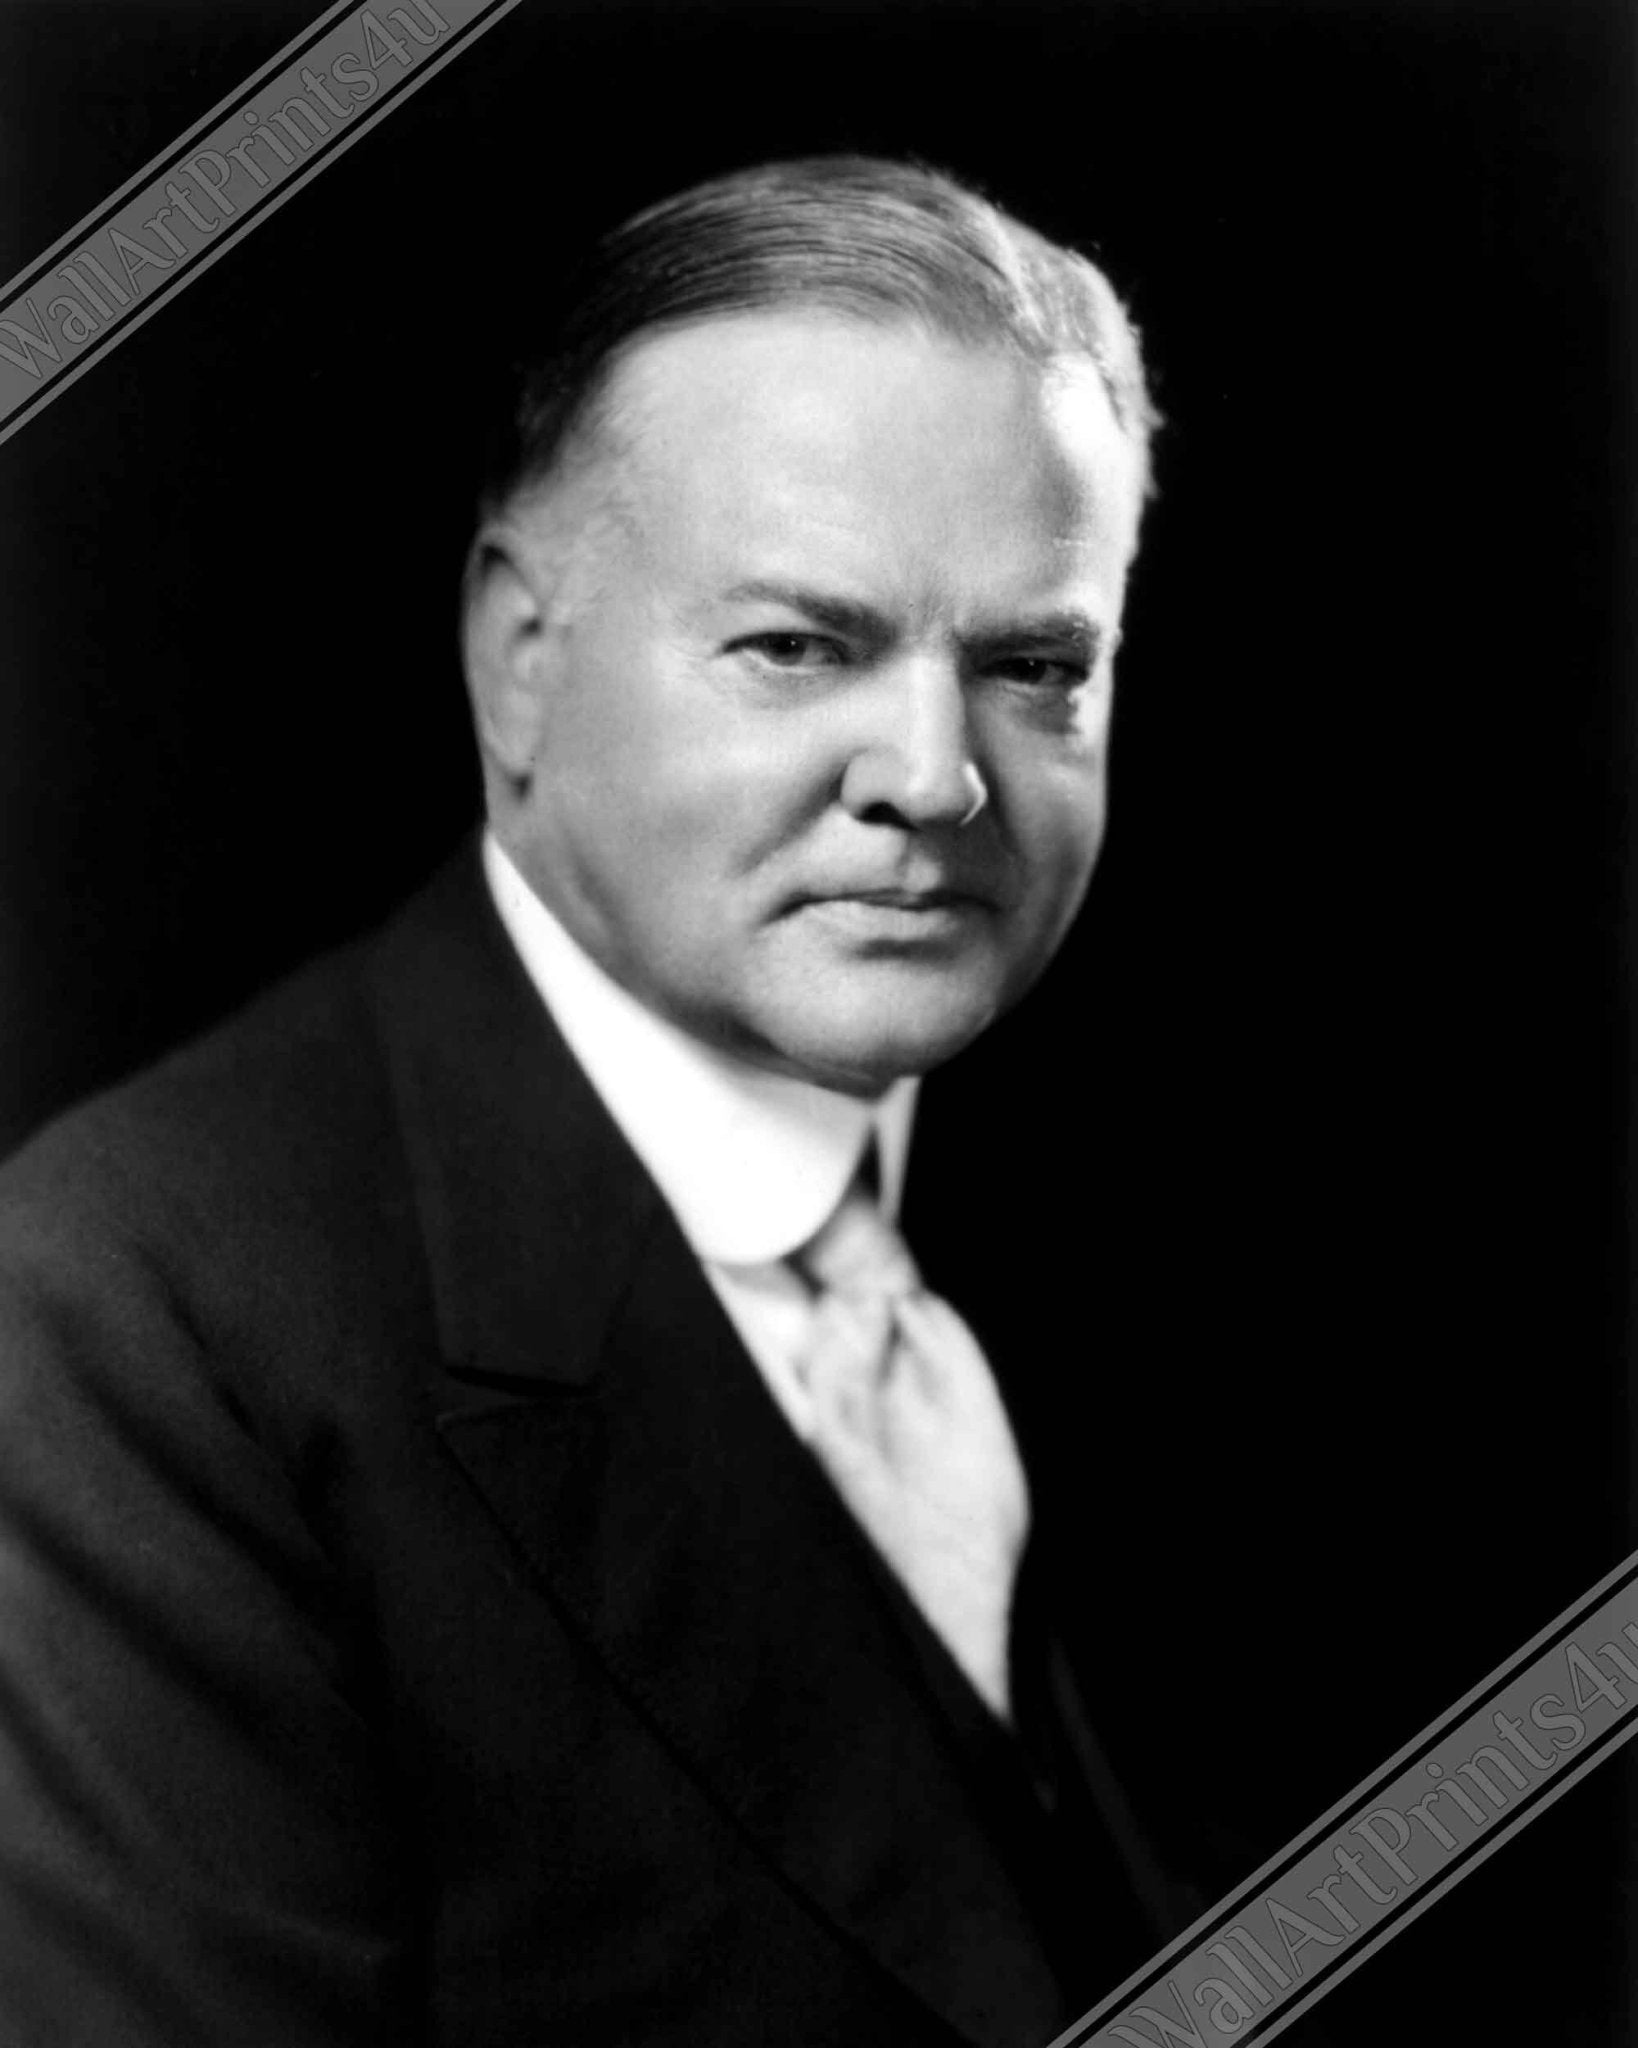 Herbert Hoover Framed, 31st President Of These United States, Vintage Photo Portrait - Herbert Hoover Framed Print - WallArtPrints4U